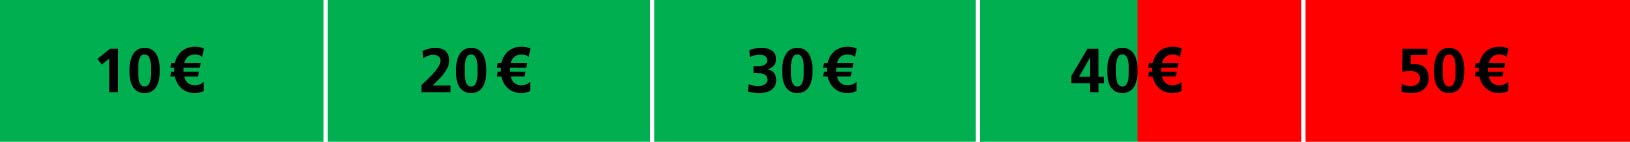 50er 35 Euro